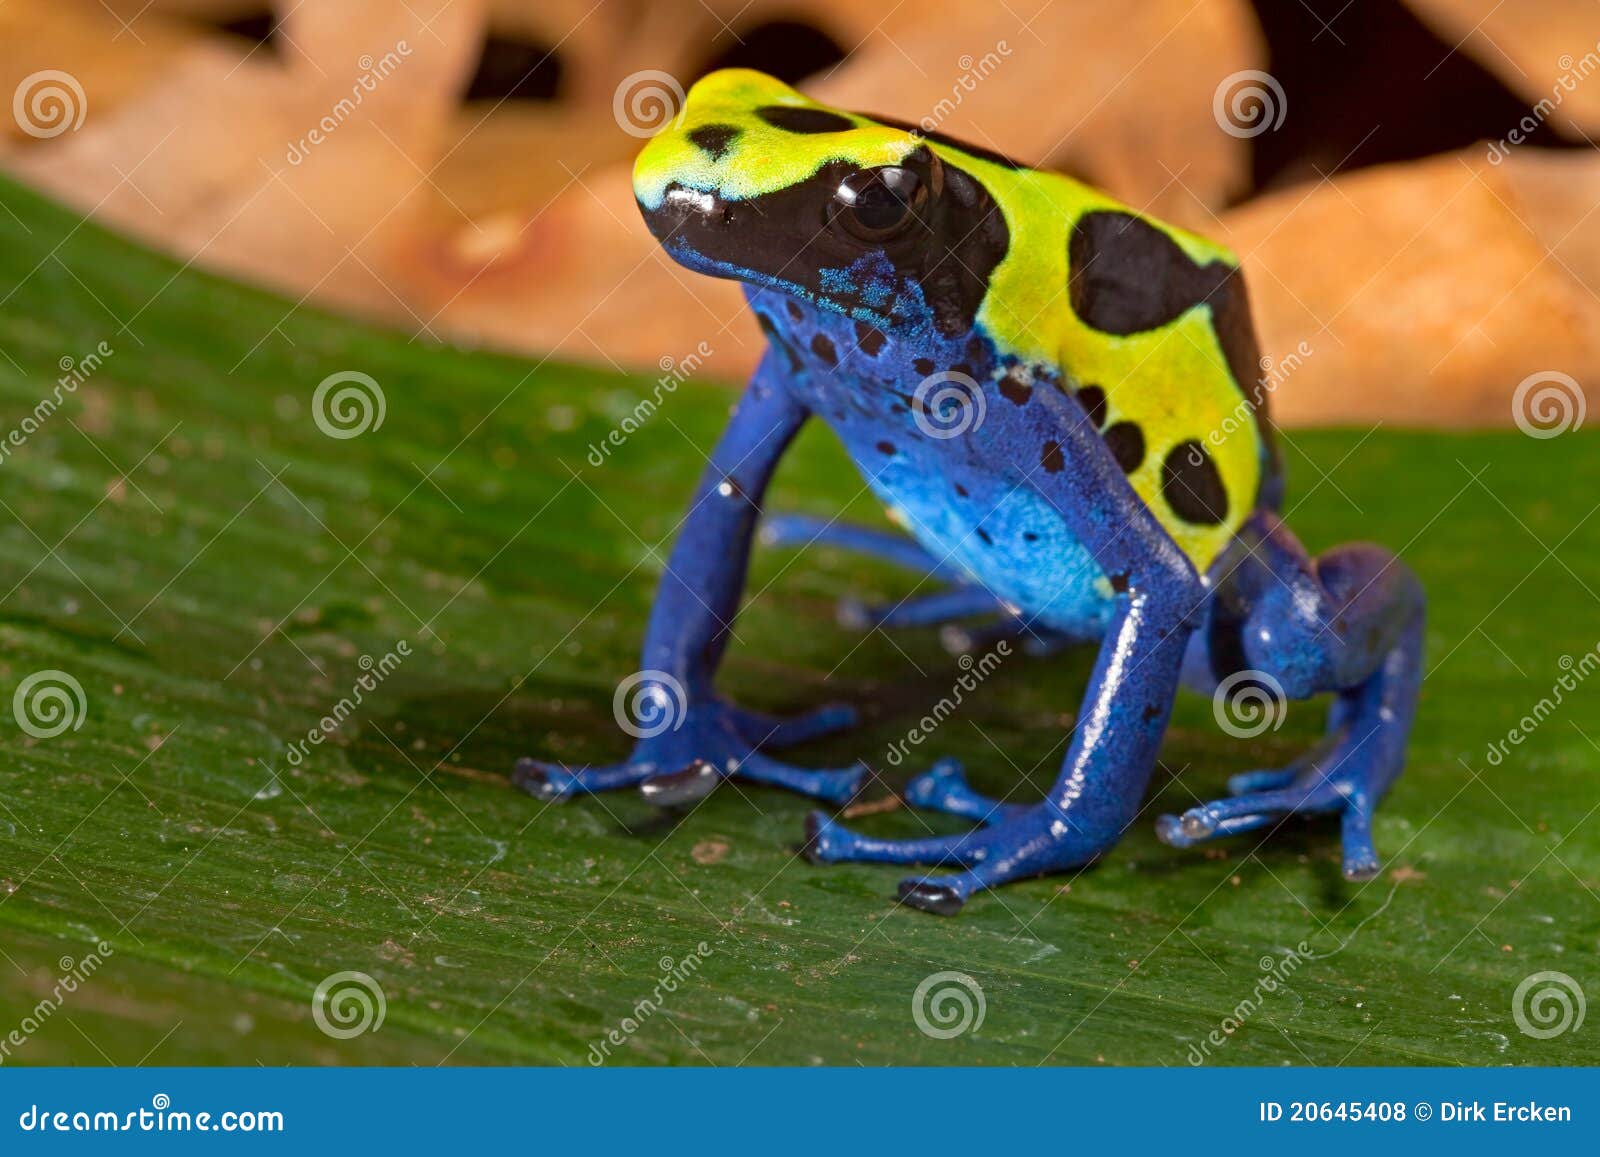 poison dart frog vivid colors amphibian